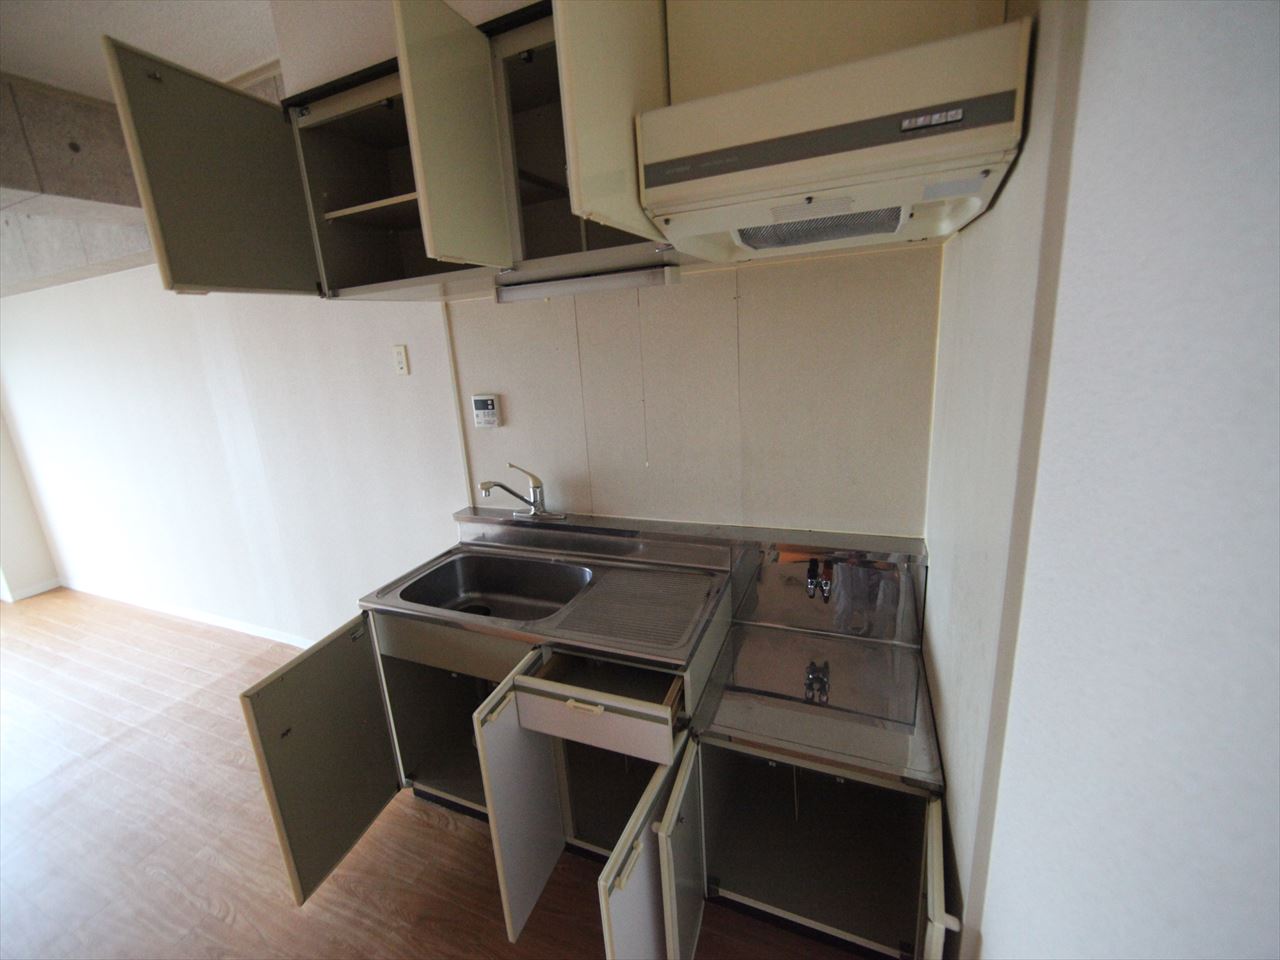 Kitchen. Kitchen (two-burner gas stove installation Allowed)